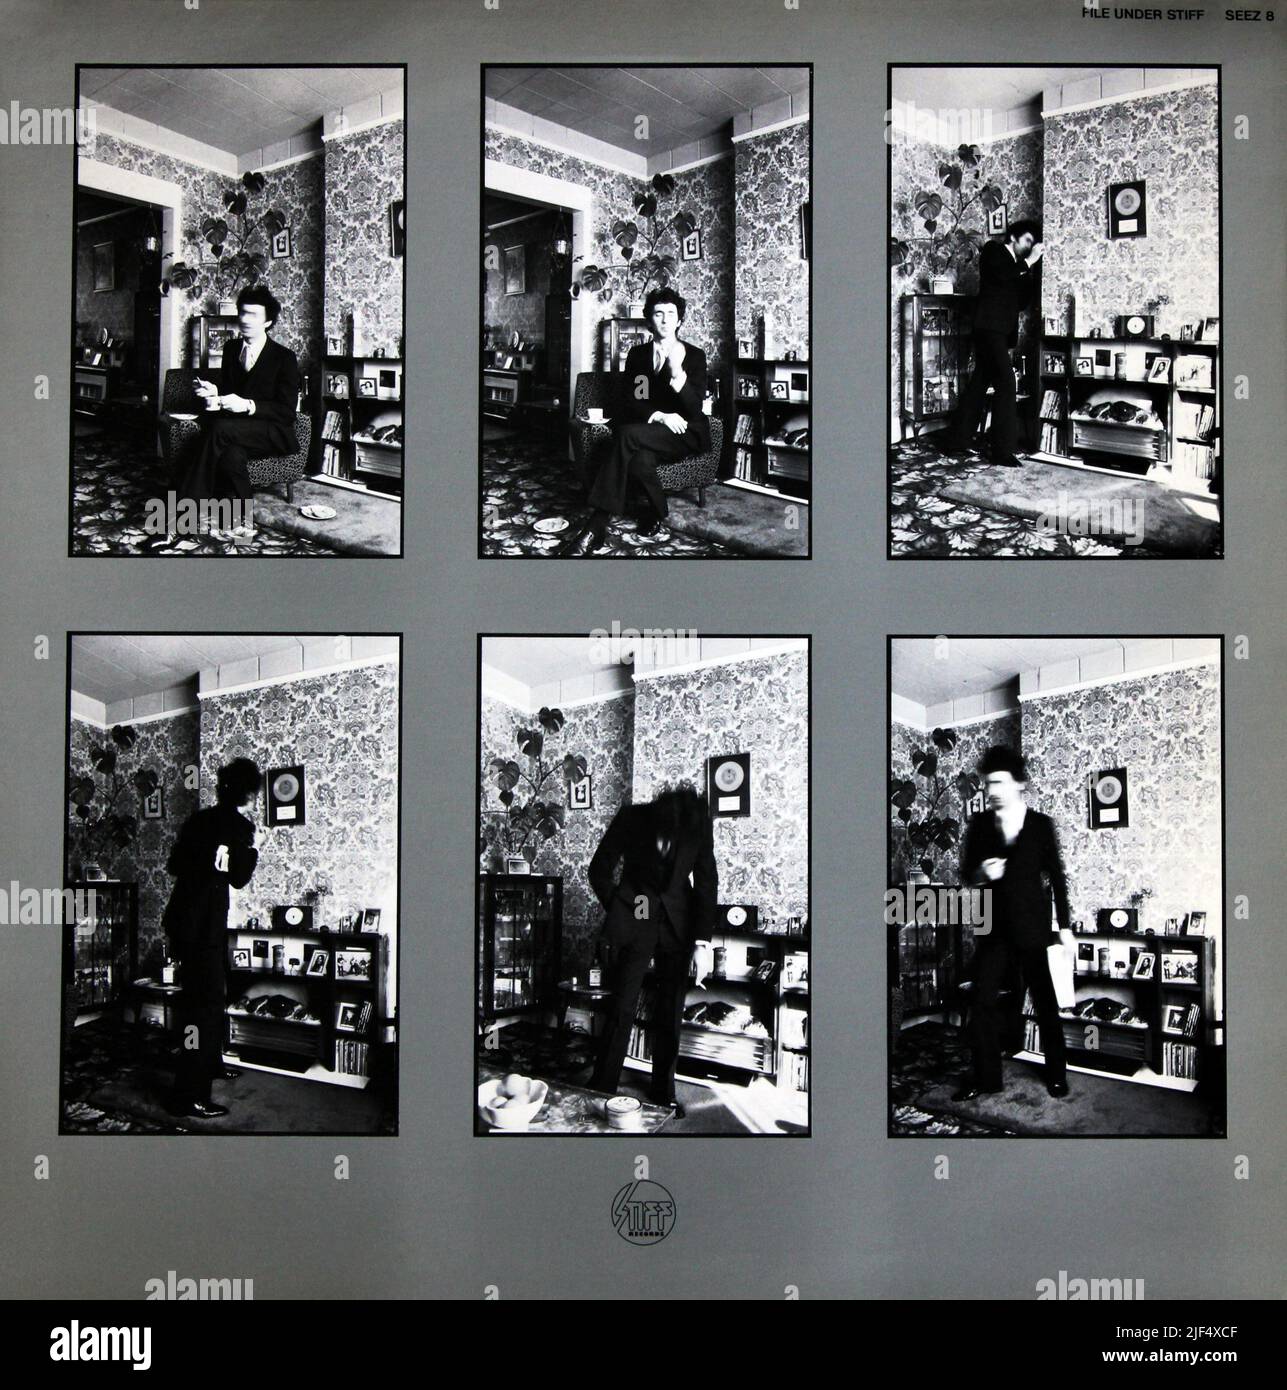 Jona Lewie: 1978. Copertina posteriore LP: "D'altra parte c'è Un pugno" Foto Stock